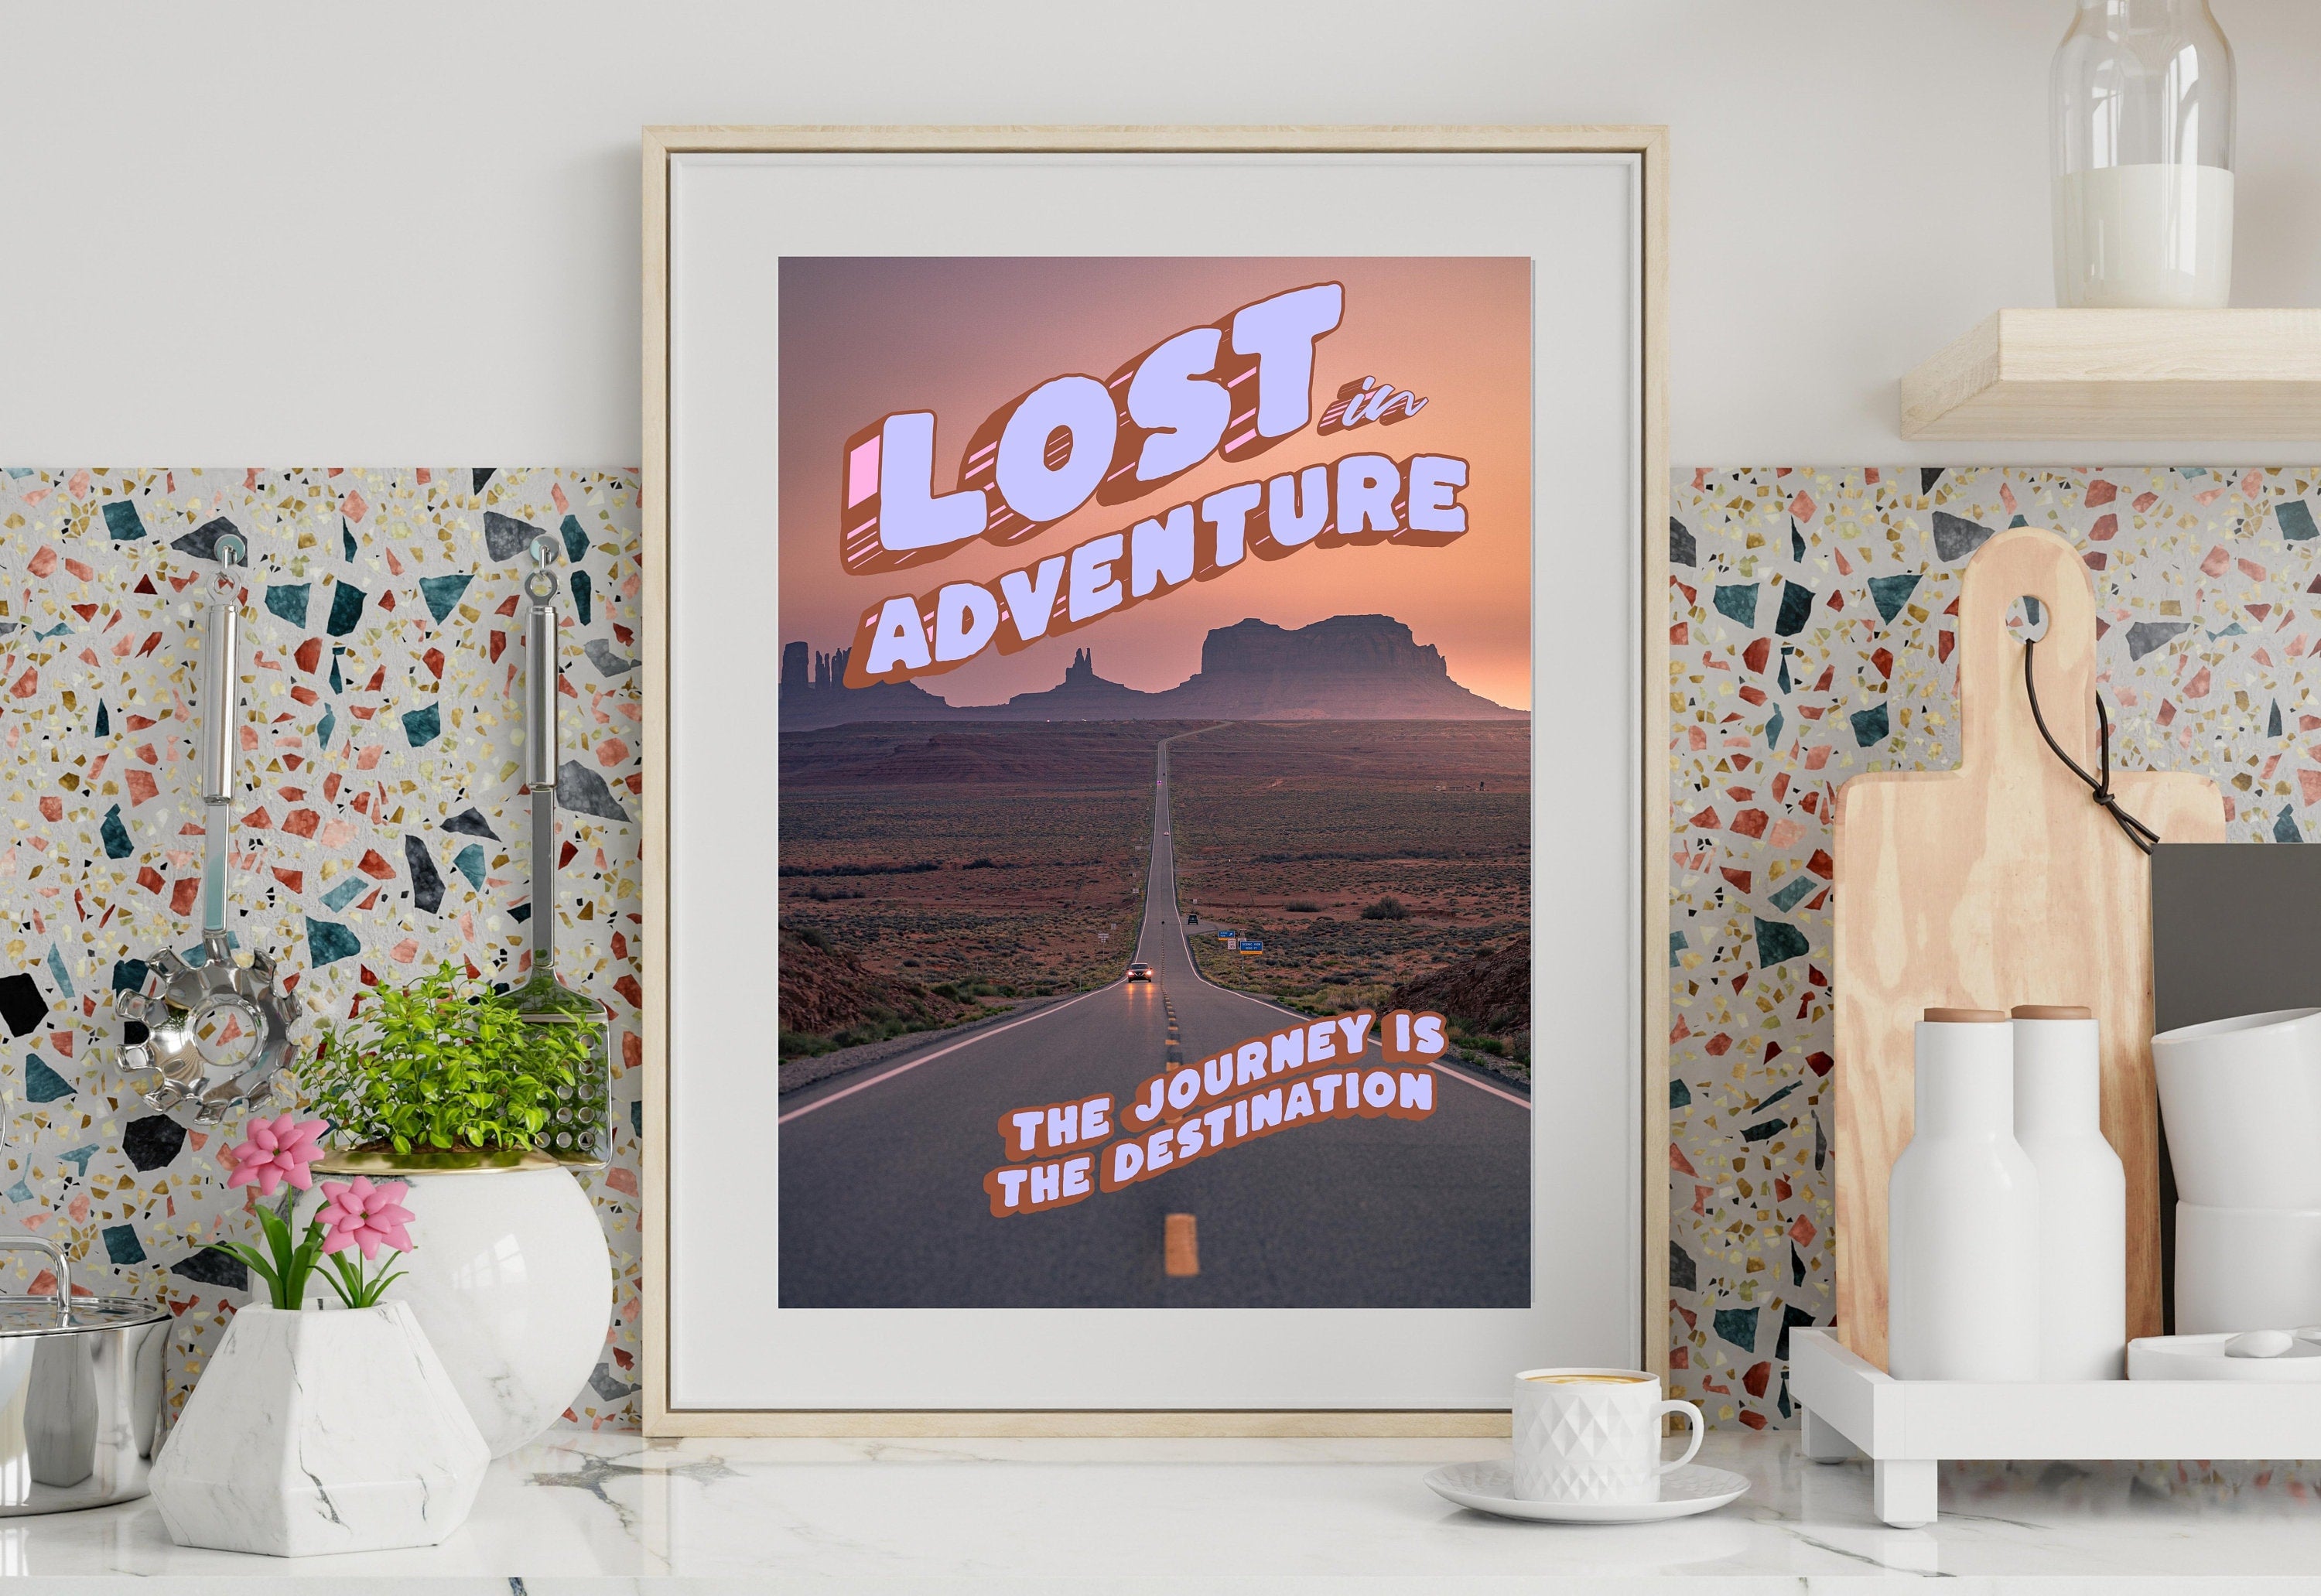 Lost in Adventure Art-Digital Art Prints-Cocktail Wall Art-Retro Photo Prints-Retro Photo Art Print-Preppy Art-Grainy Gradient-Trendy Print